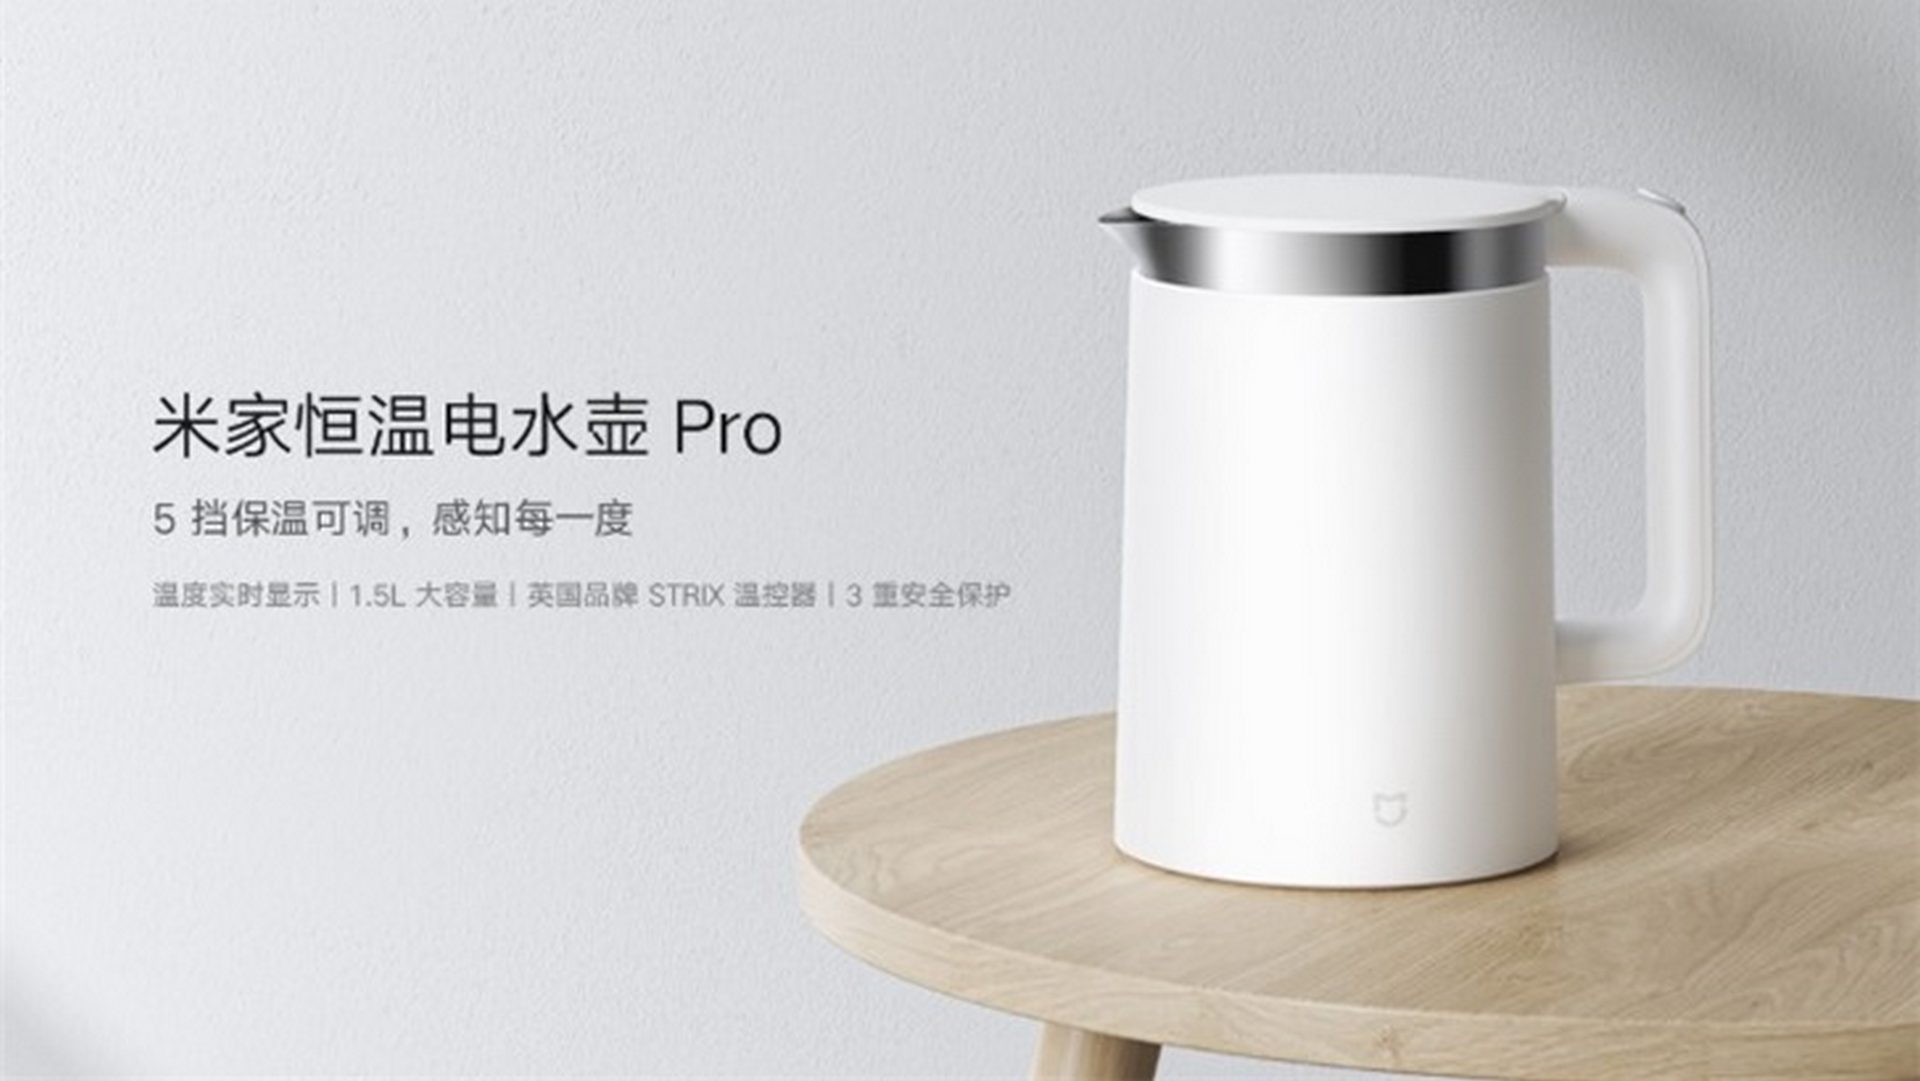 Xiaomi mijia electric kettle 2